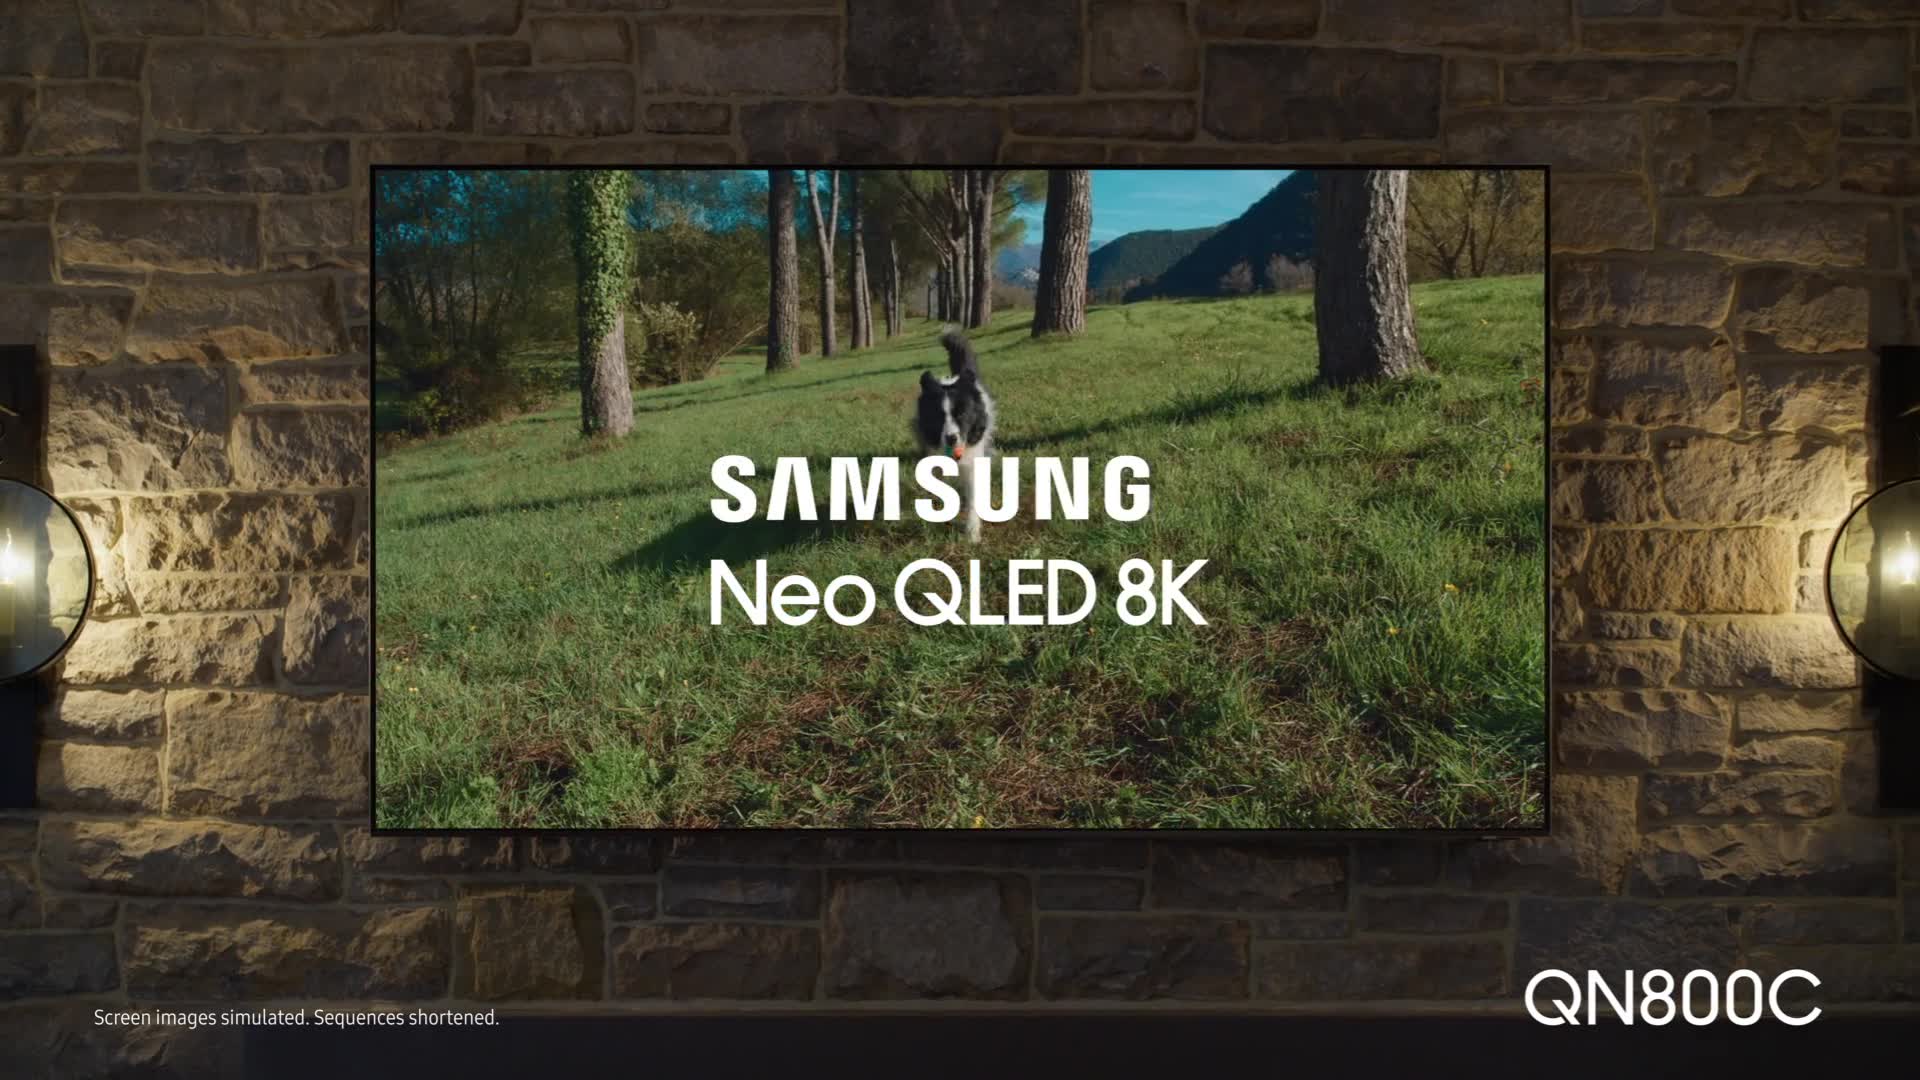 Samsung 85 QN800C Neo QLED 8K Smart TV (2023) - QN85QN800C